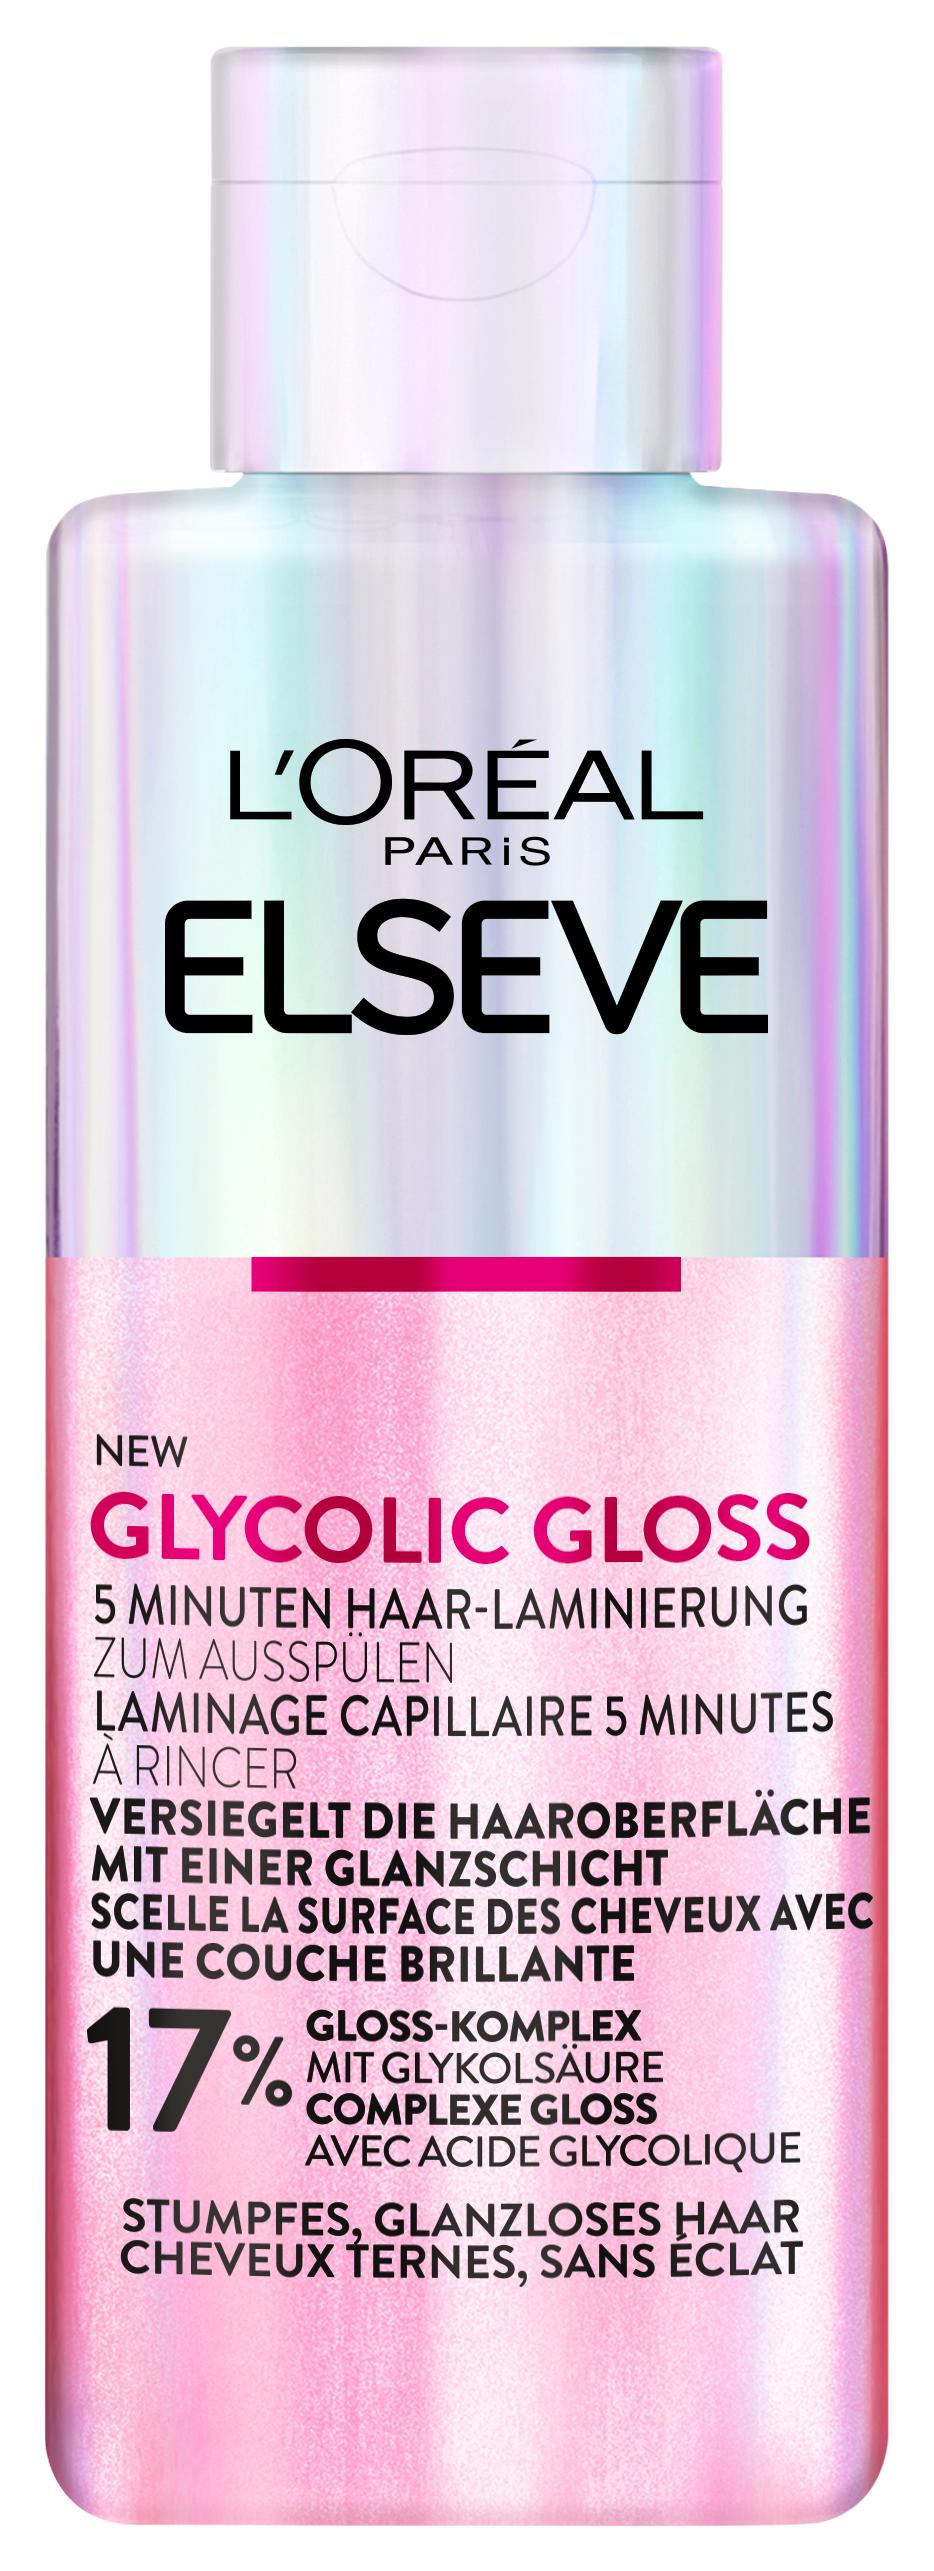 LOréal Elseve Haircare - Glycolic Gloss 5 Minutes Hair-Lamination